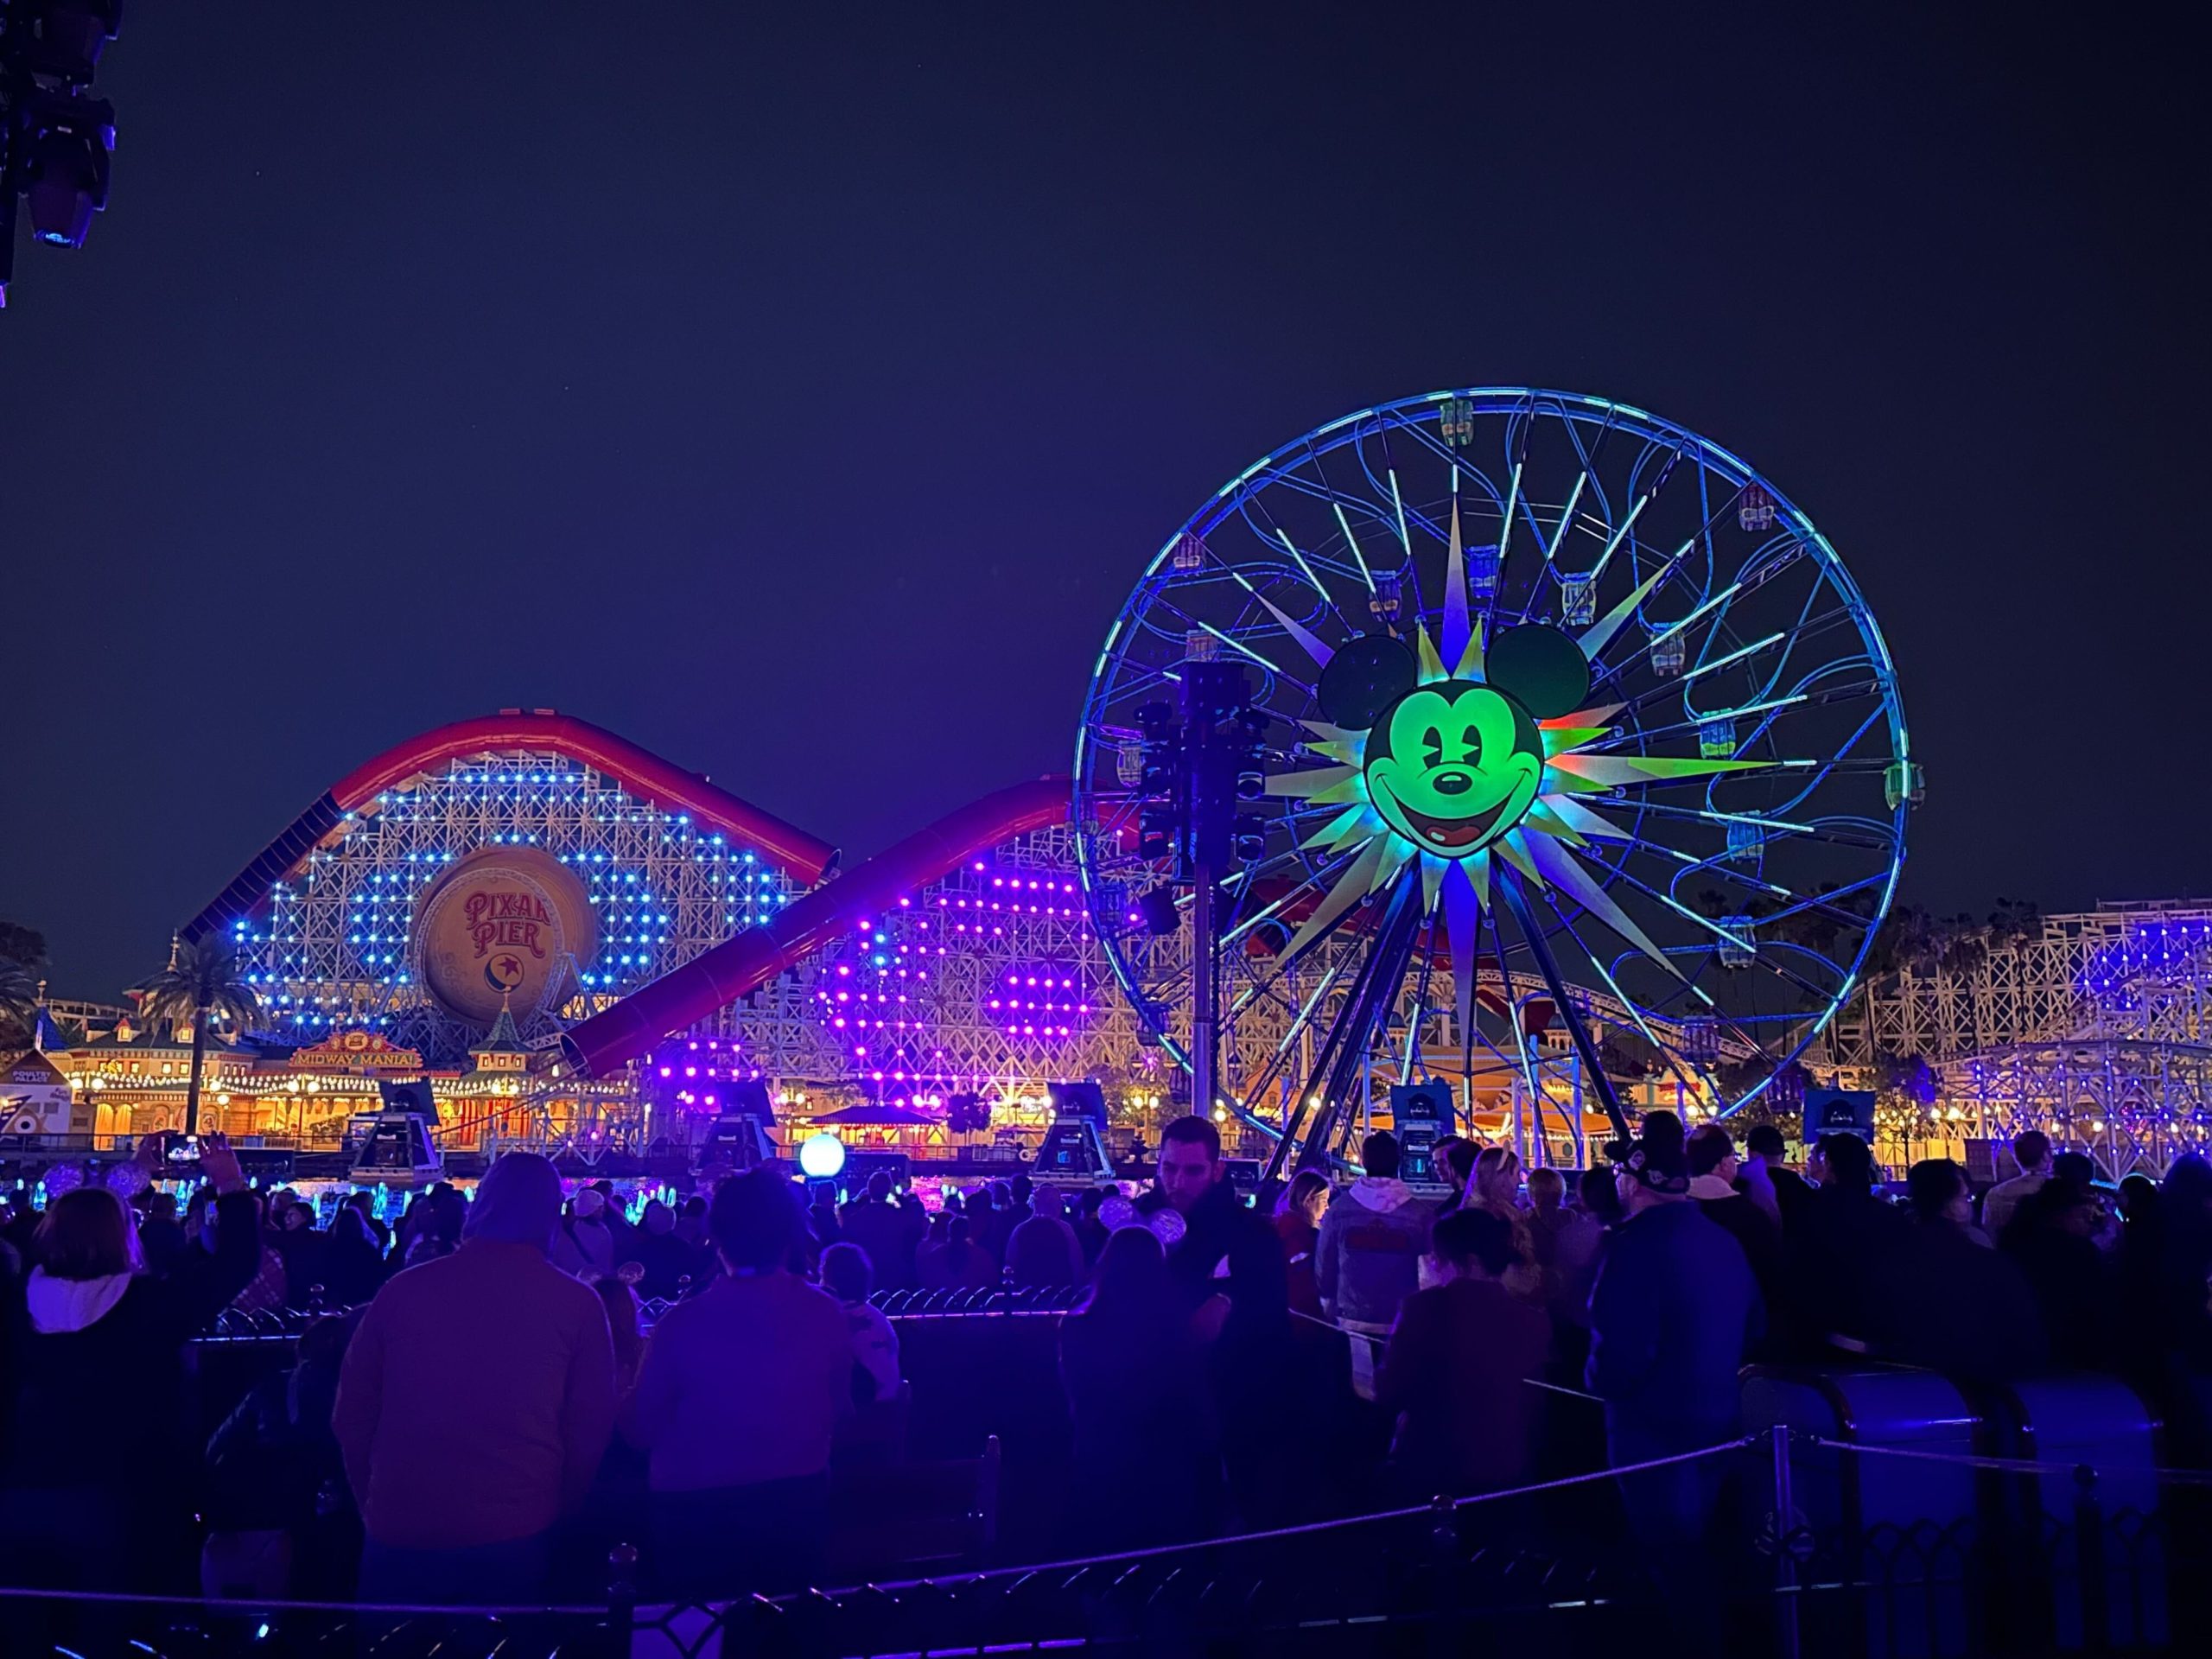 Nighttime Entertainment at the Disneyland Resort